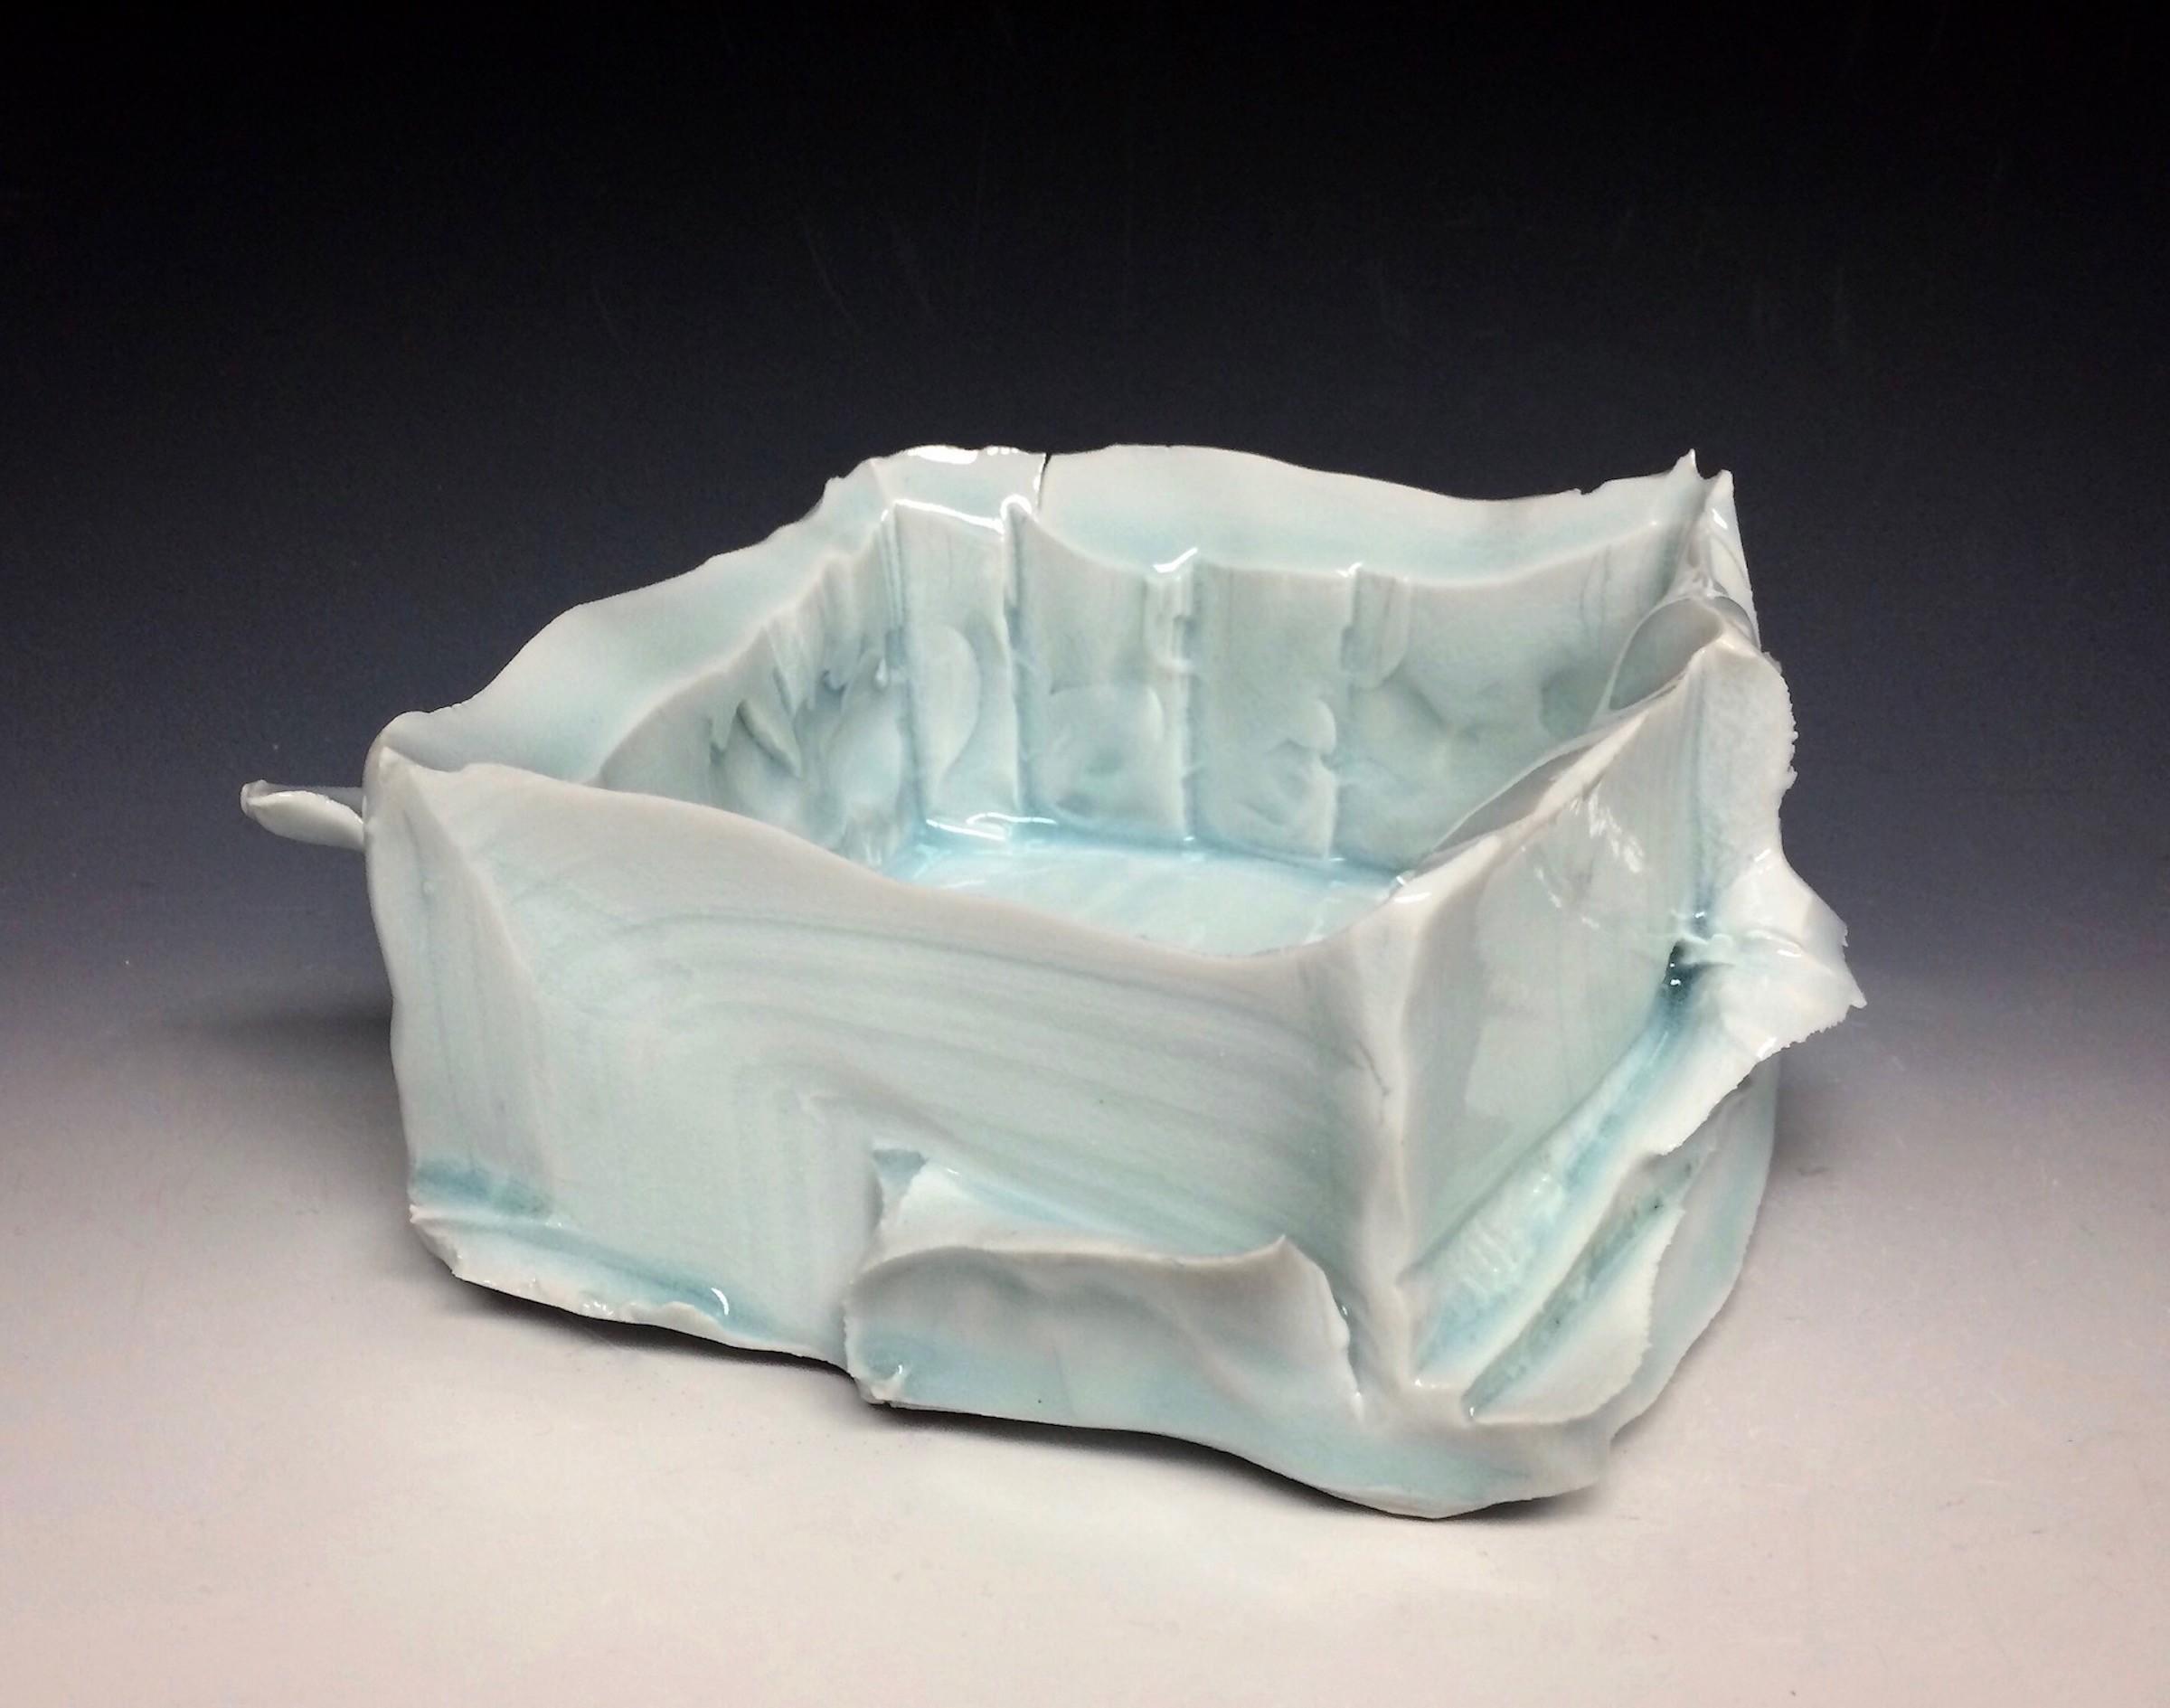 Ceramic sculpture of iceberg vessel by artist John Oles.